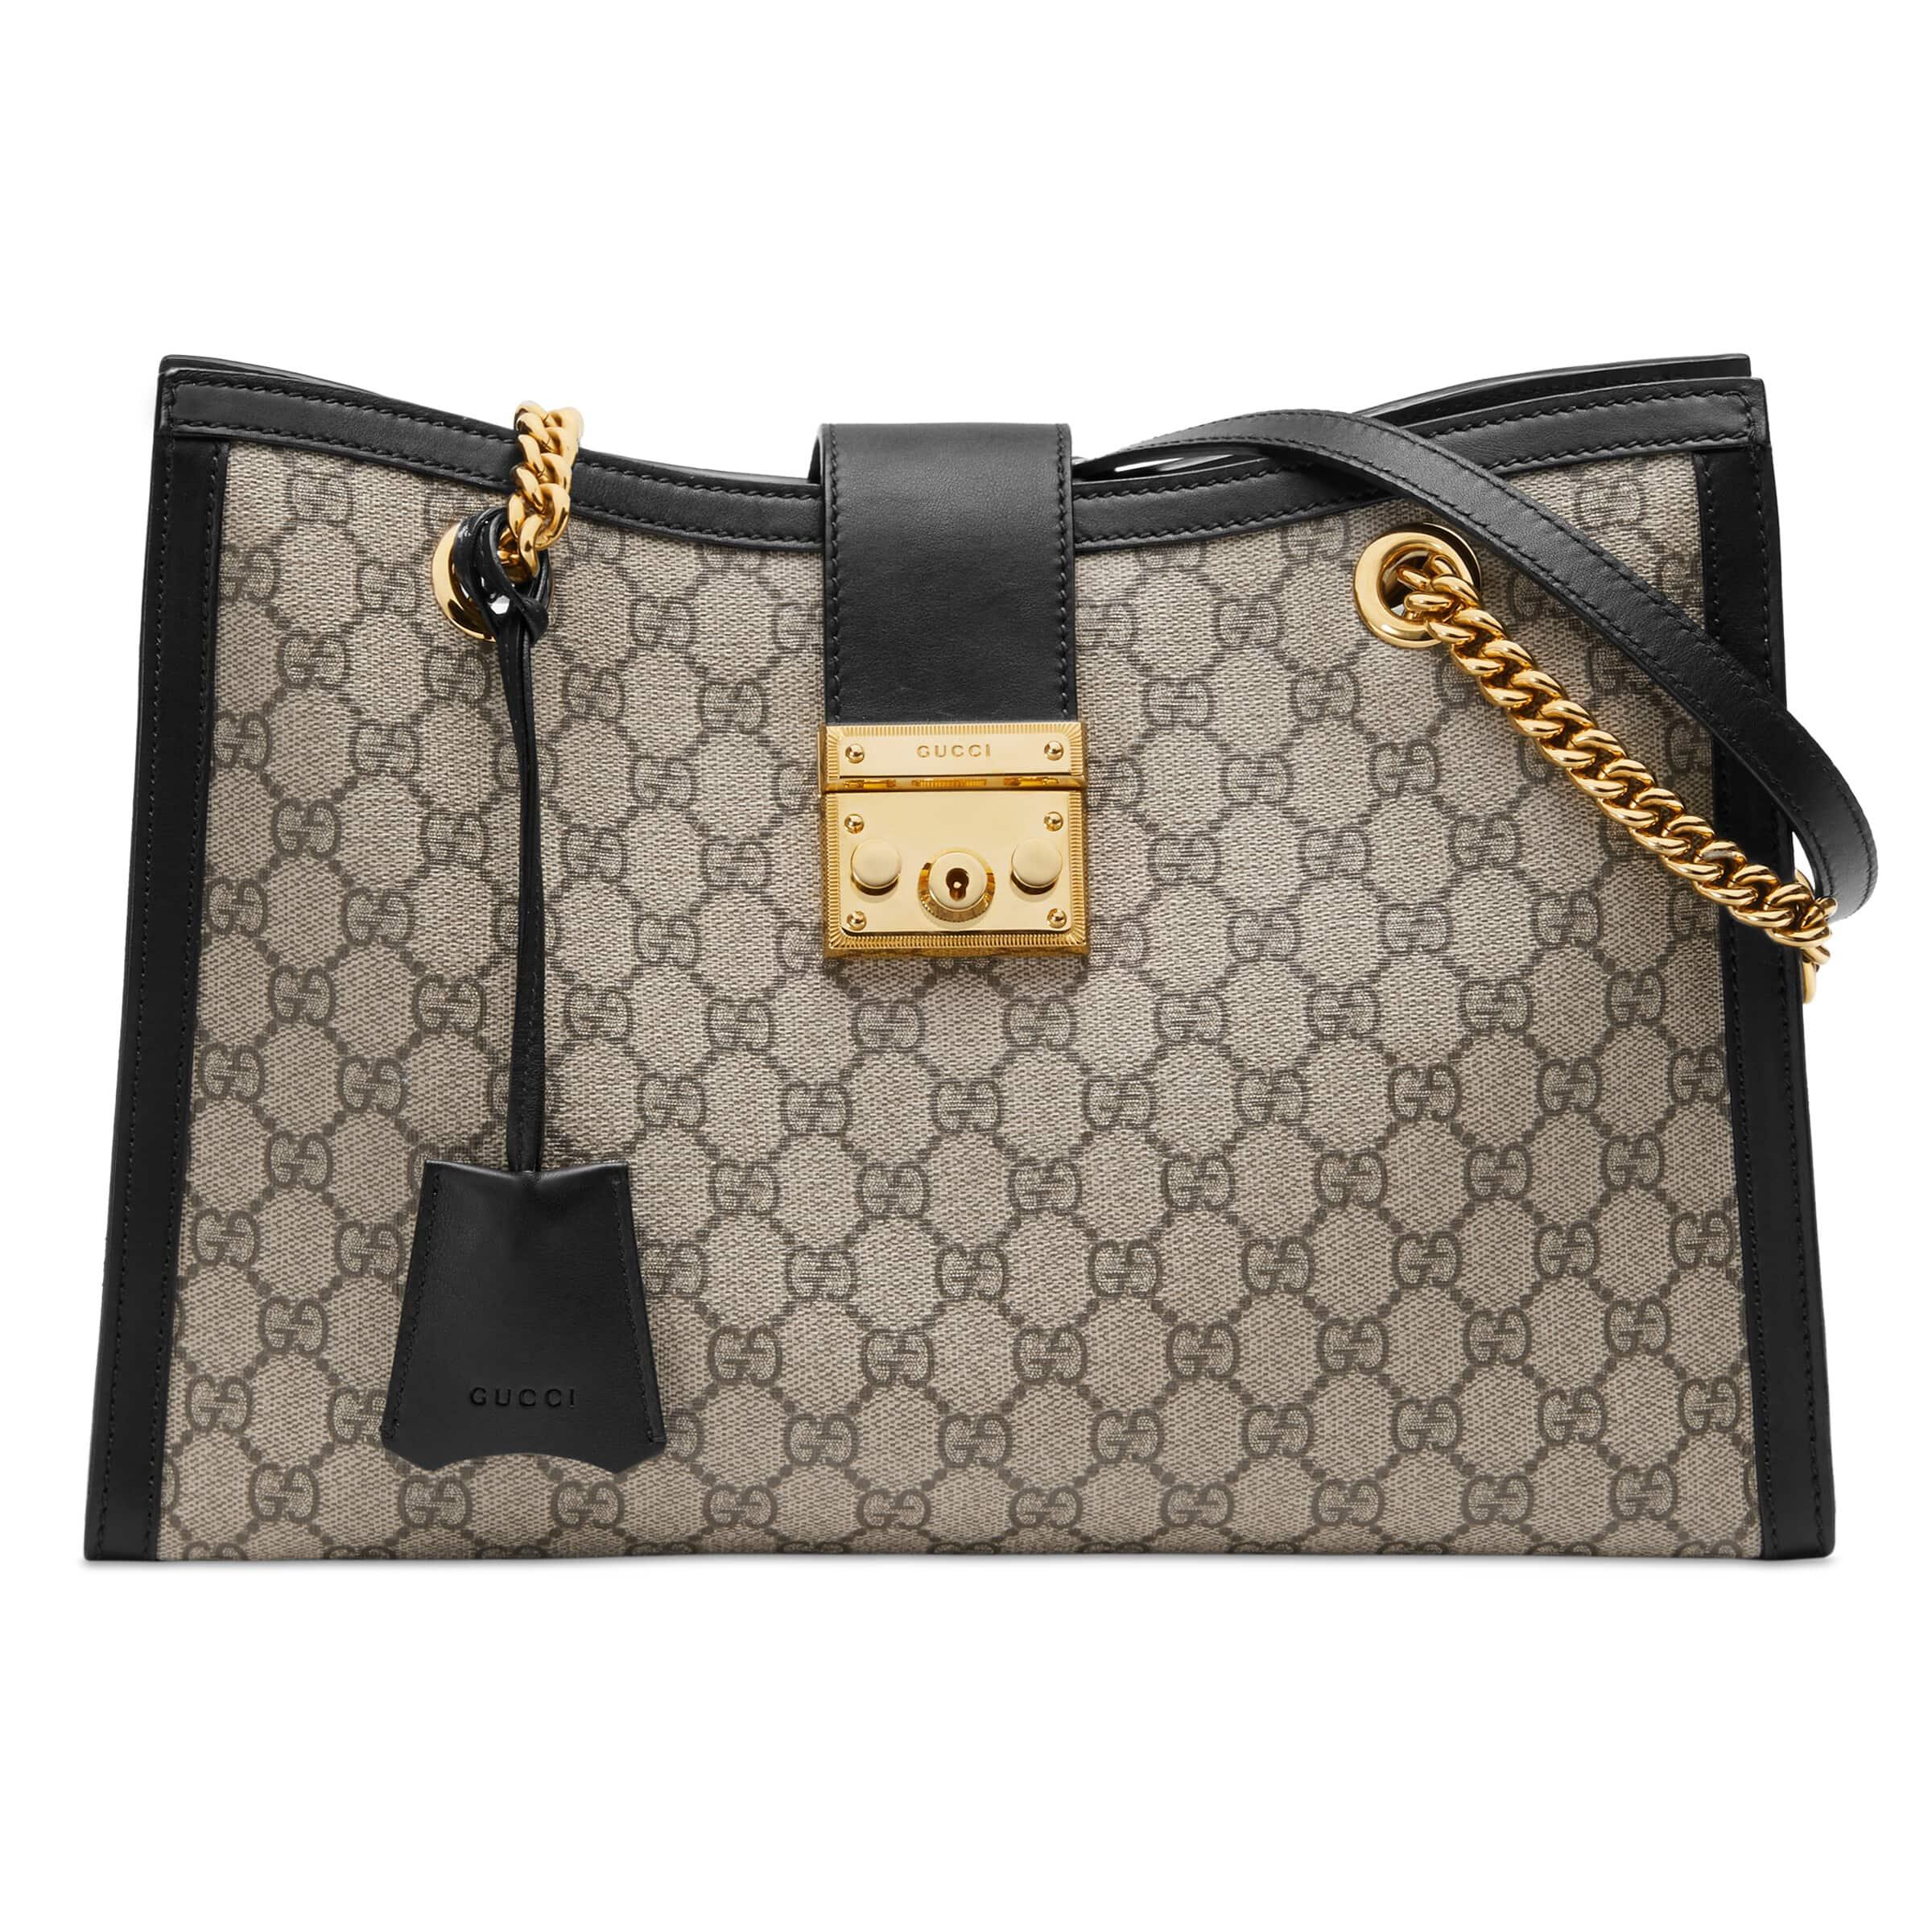 Gucci Padlock Medium GG Shoulder Bag in Metallic | Lyst